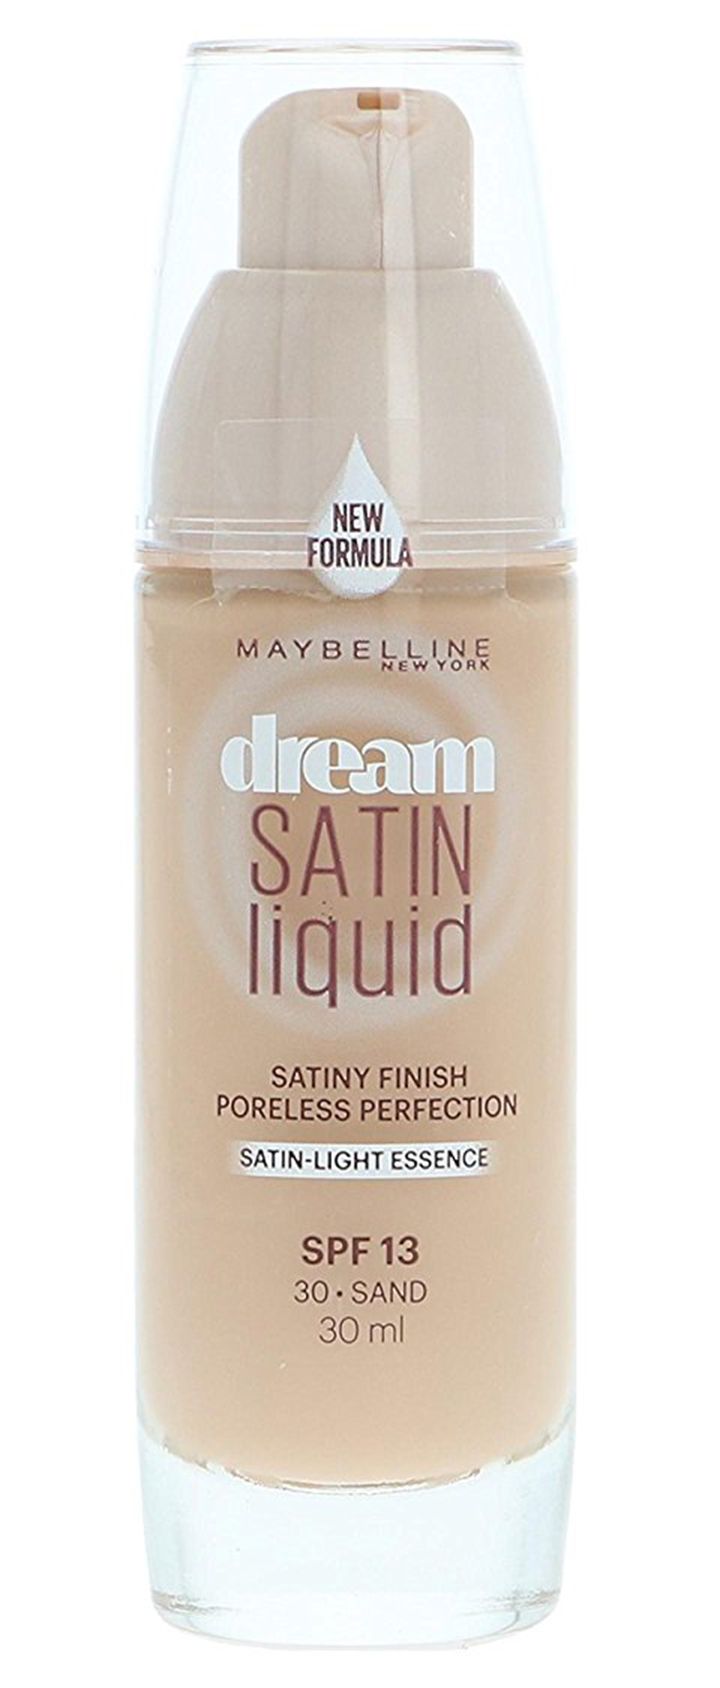 Maybelline Dream Satin Liquid Foundation | Image Source: www.amazon.com